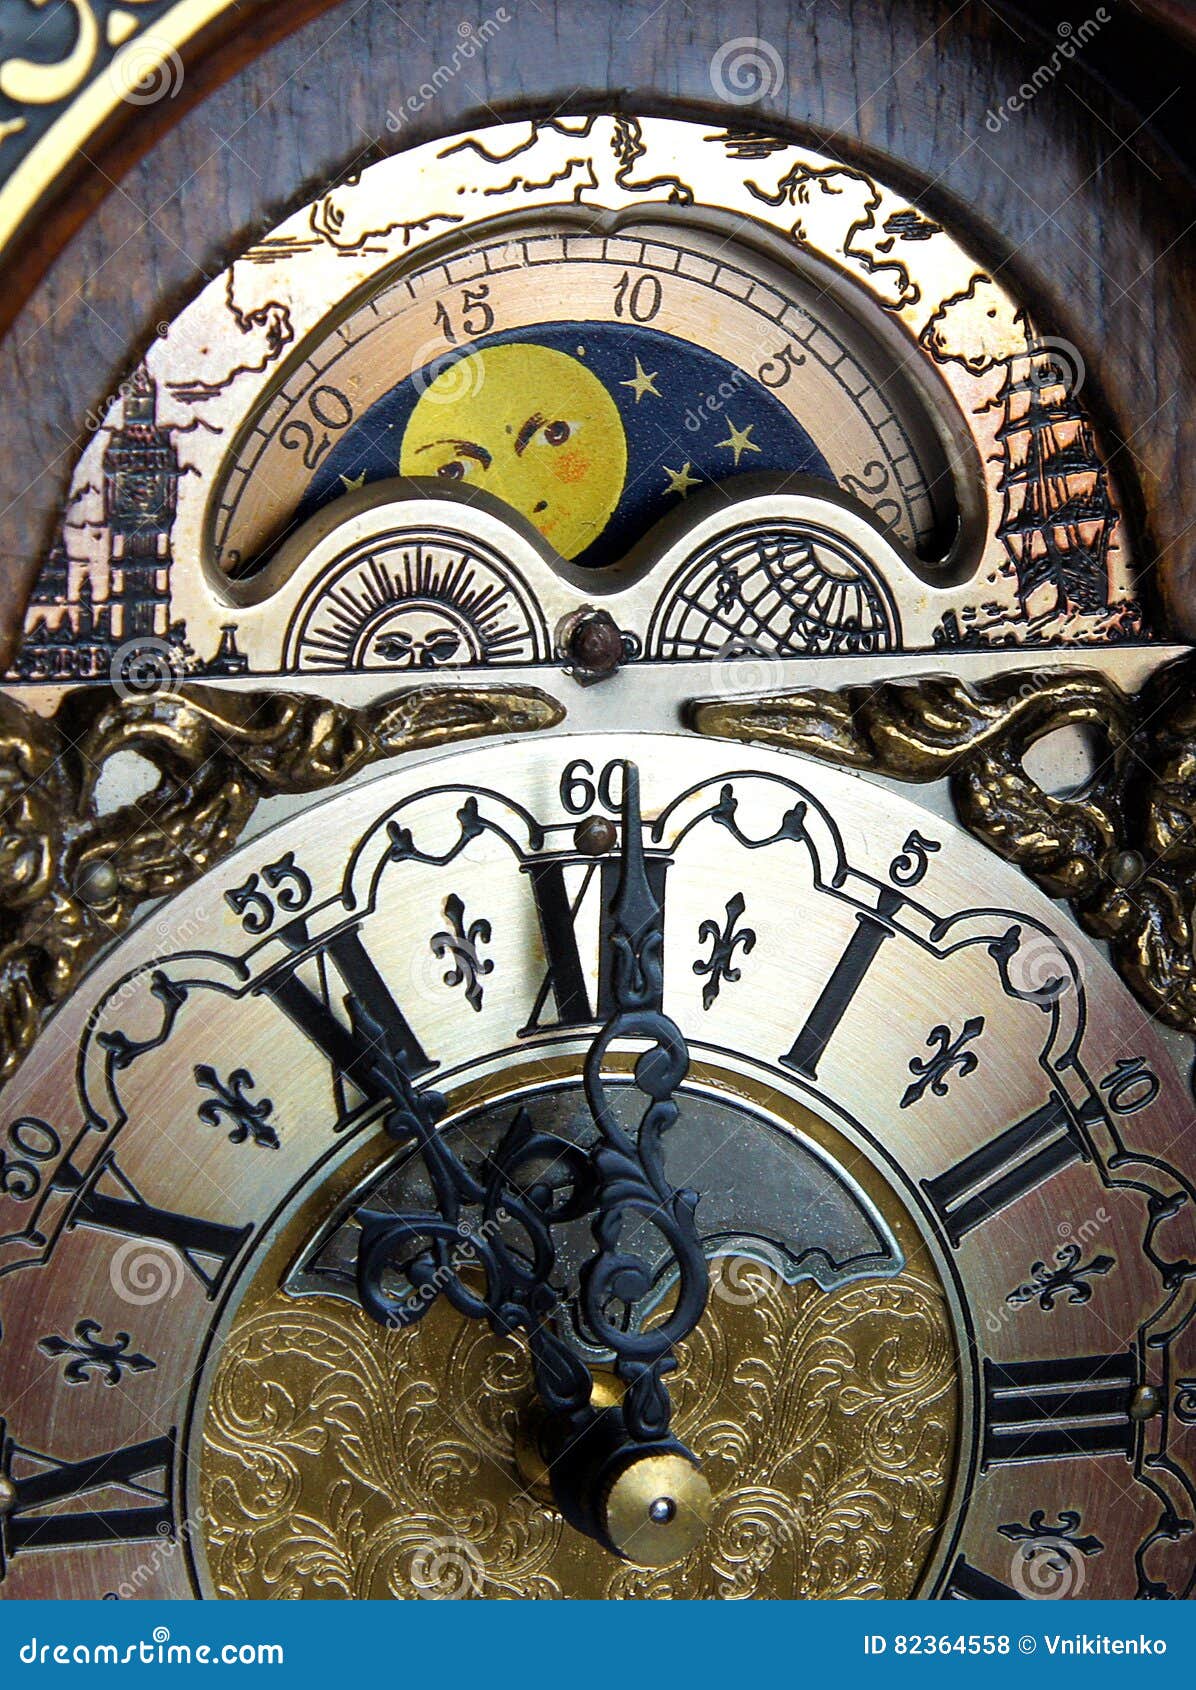 lunar calendar of mantel clock